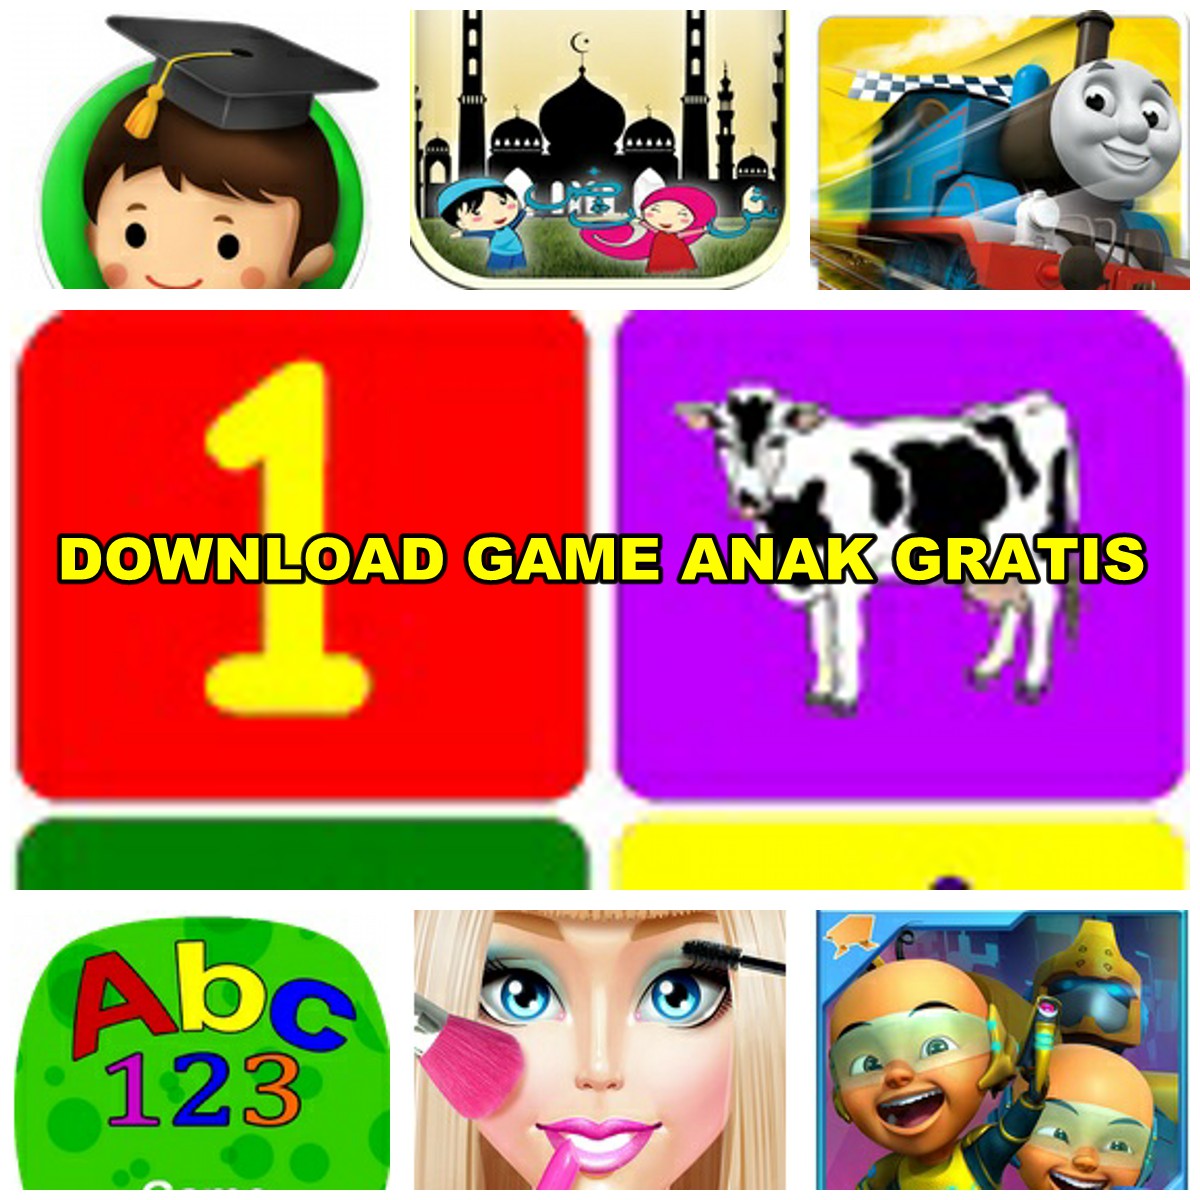 Download Game Anak GRATIS for Android - AlamSemesta19 